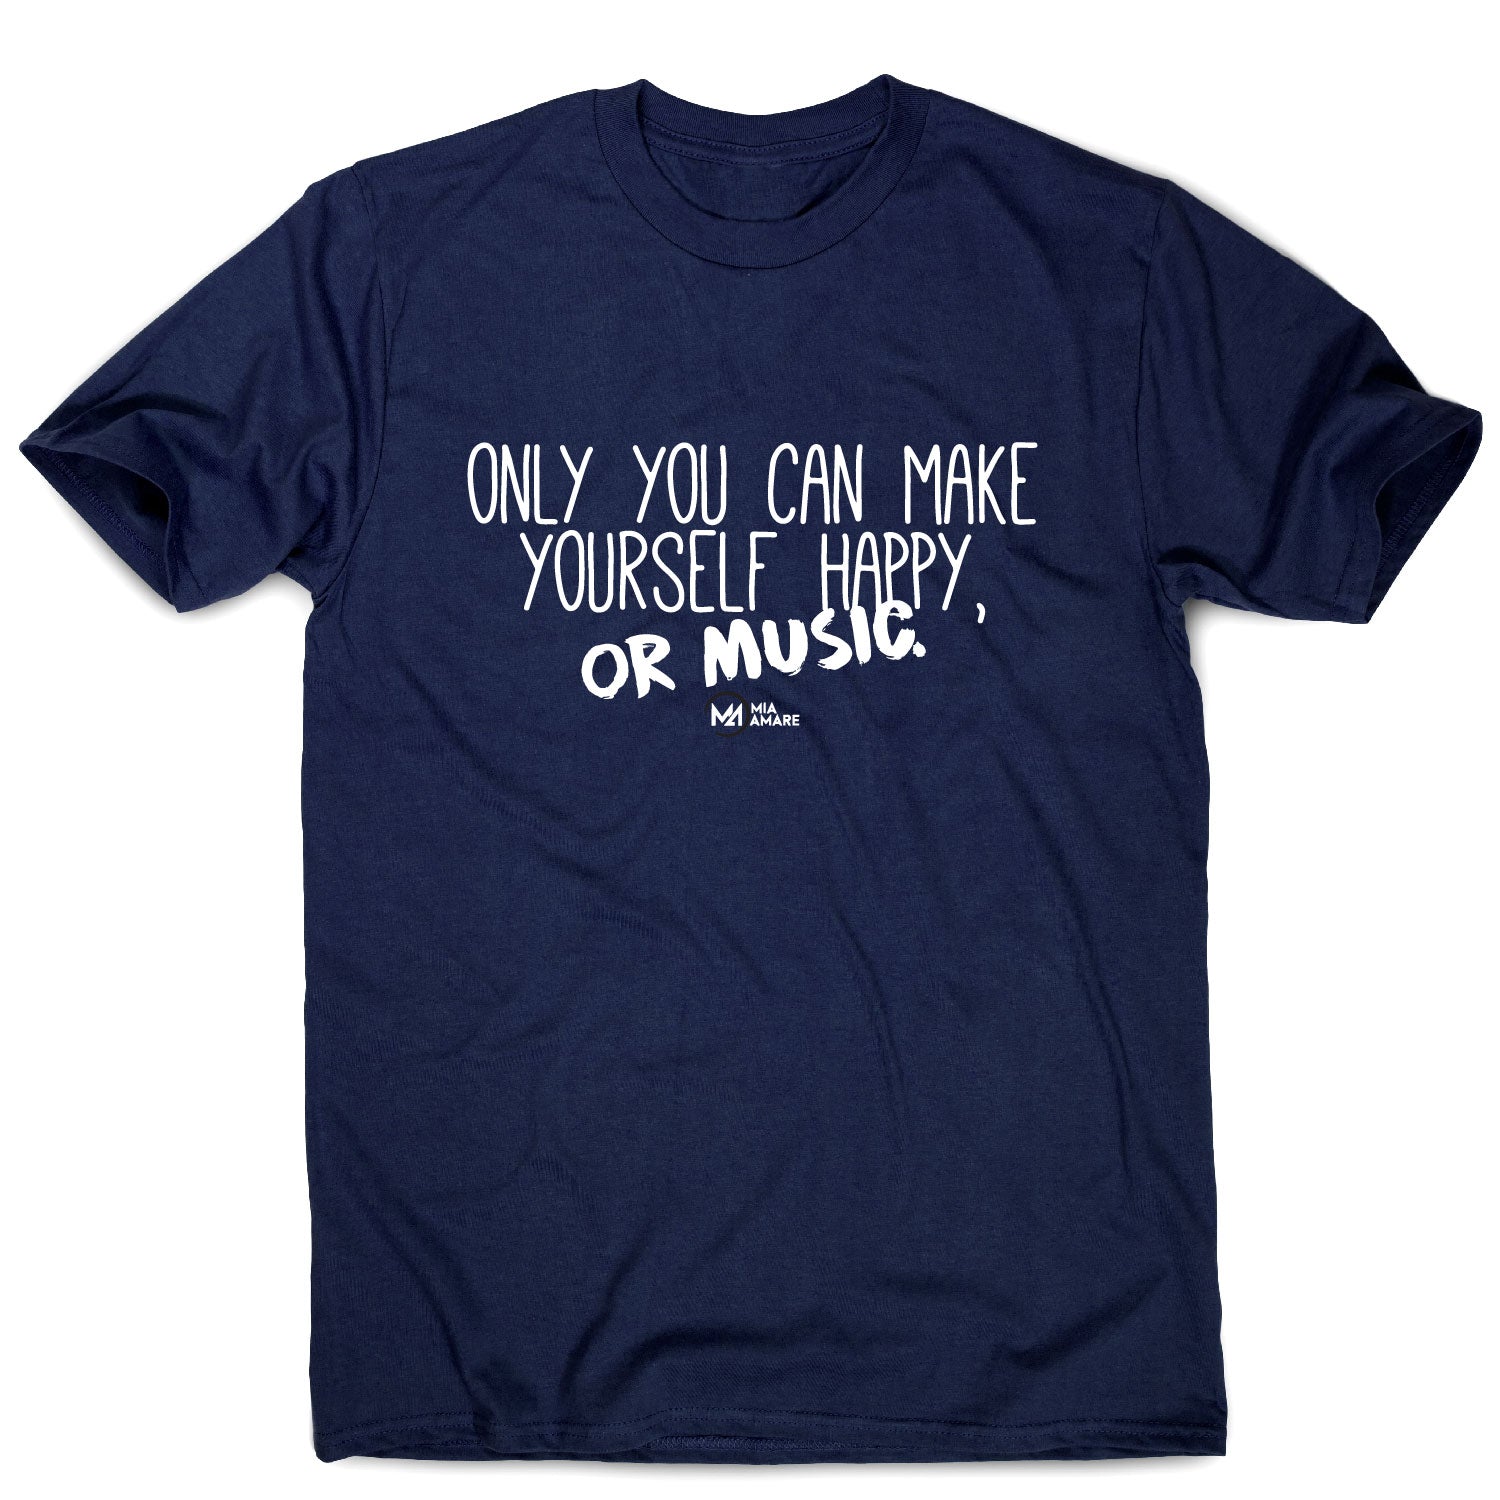 Funny slogan T shirts | Funny T shirts for men | Mia Amare - men's ...